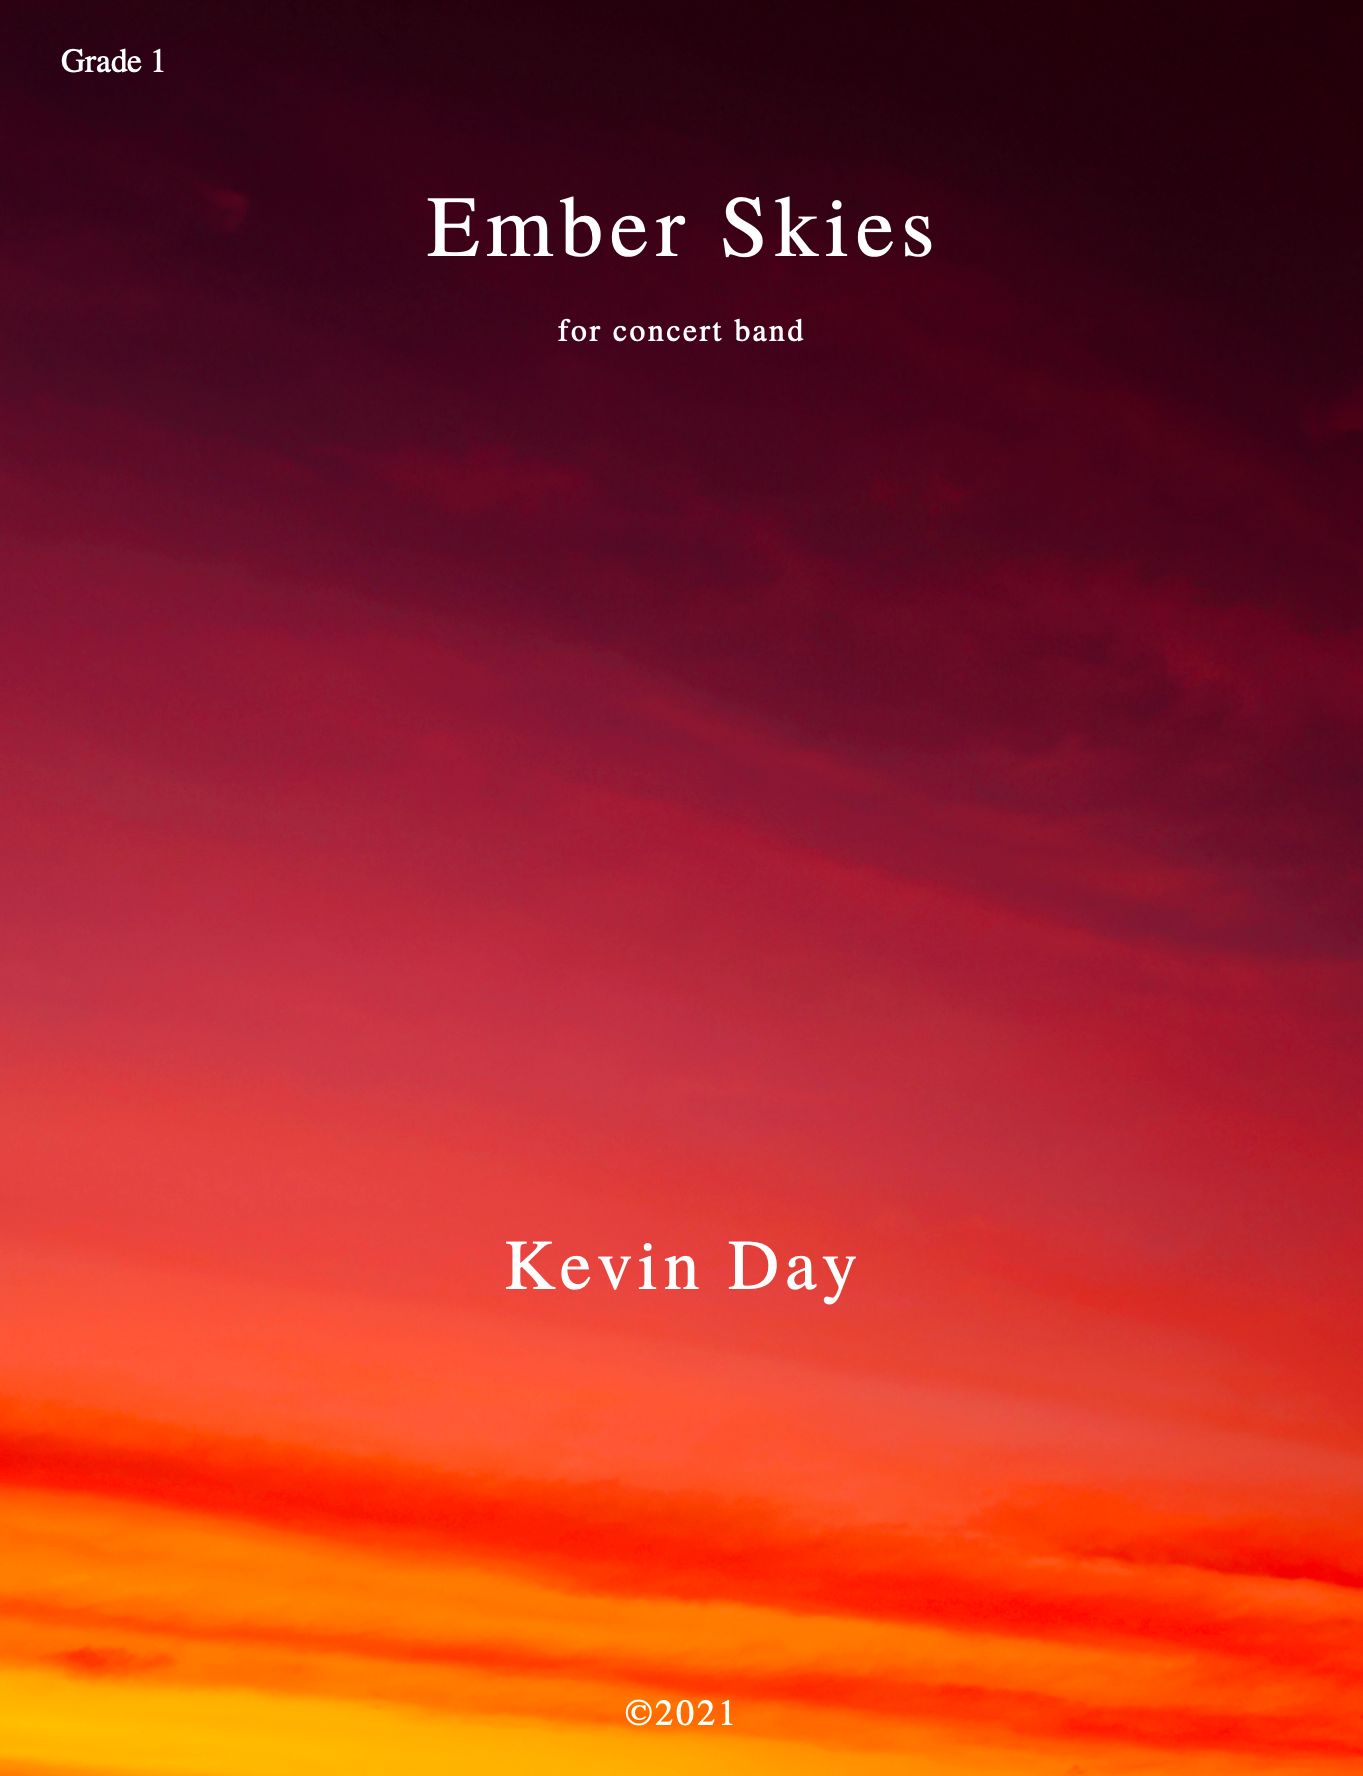 Murphy Music Press - Grade 1.5 - Ember Skies - Kevin Day - Hardcopy Sc & Pts